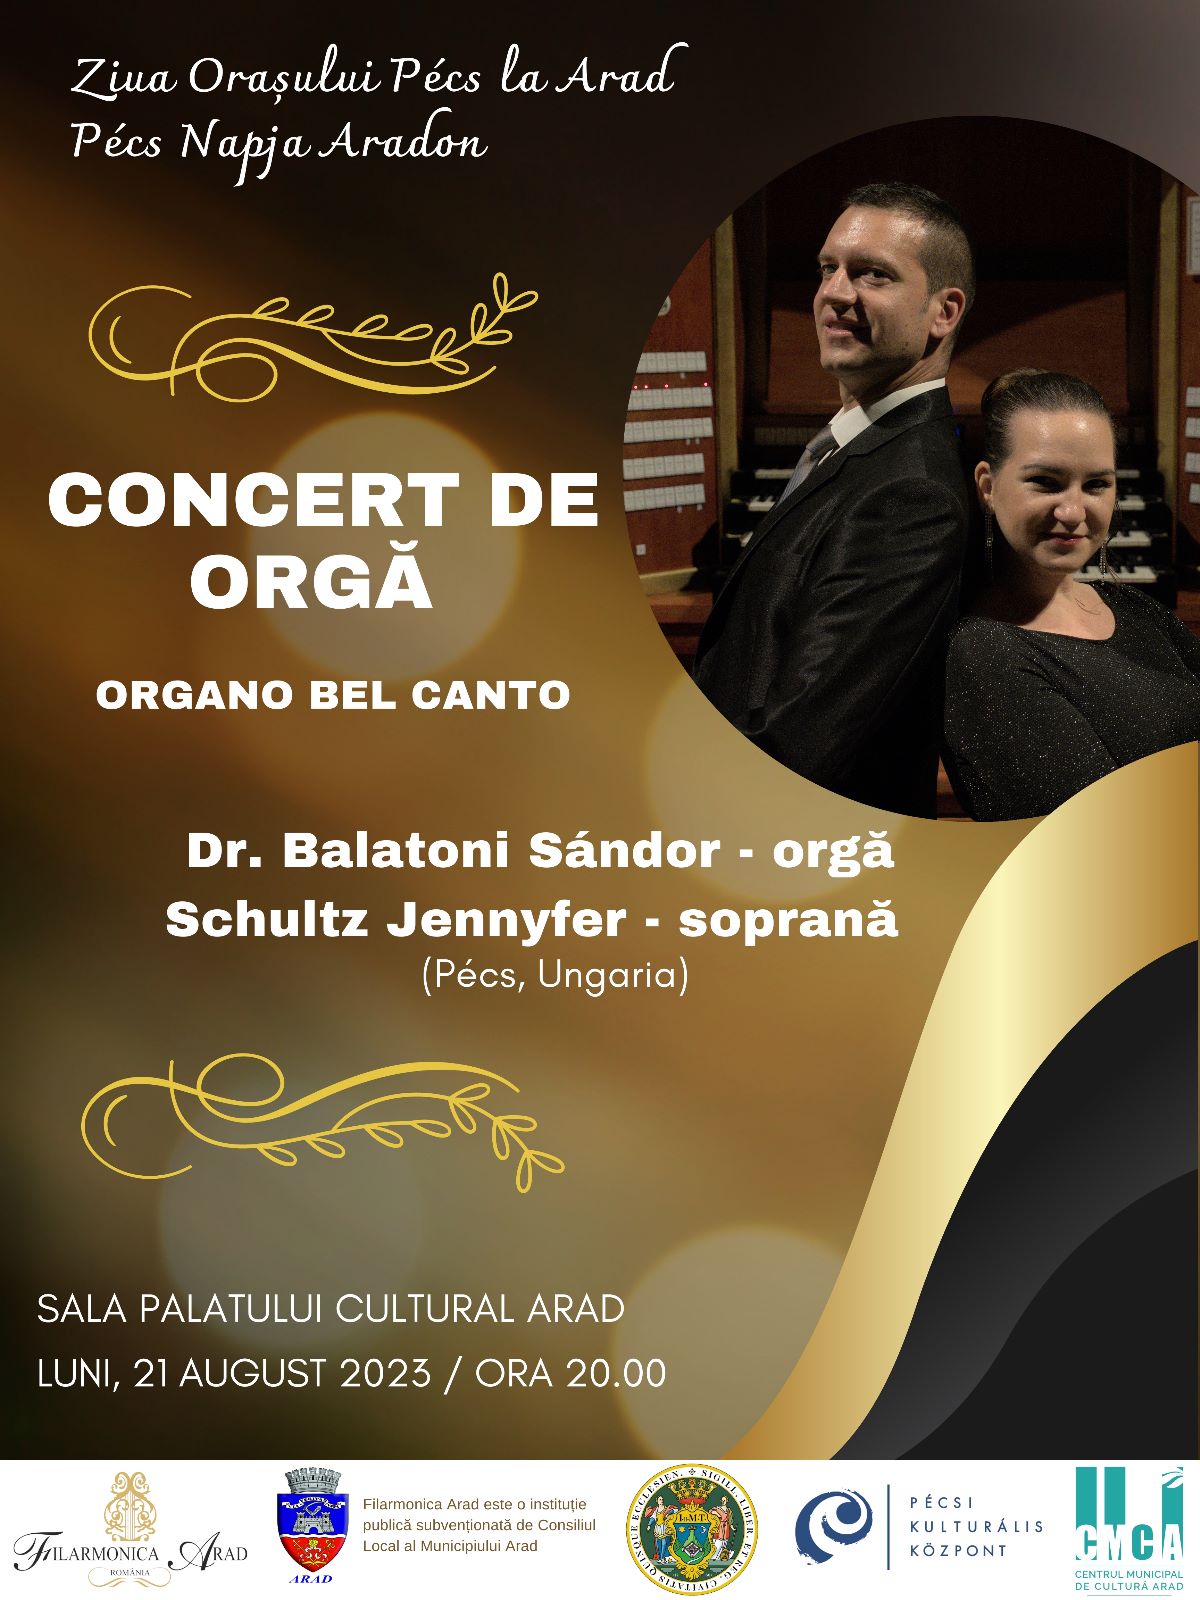 Poster 1 -Concert de Orga